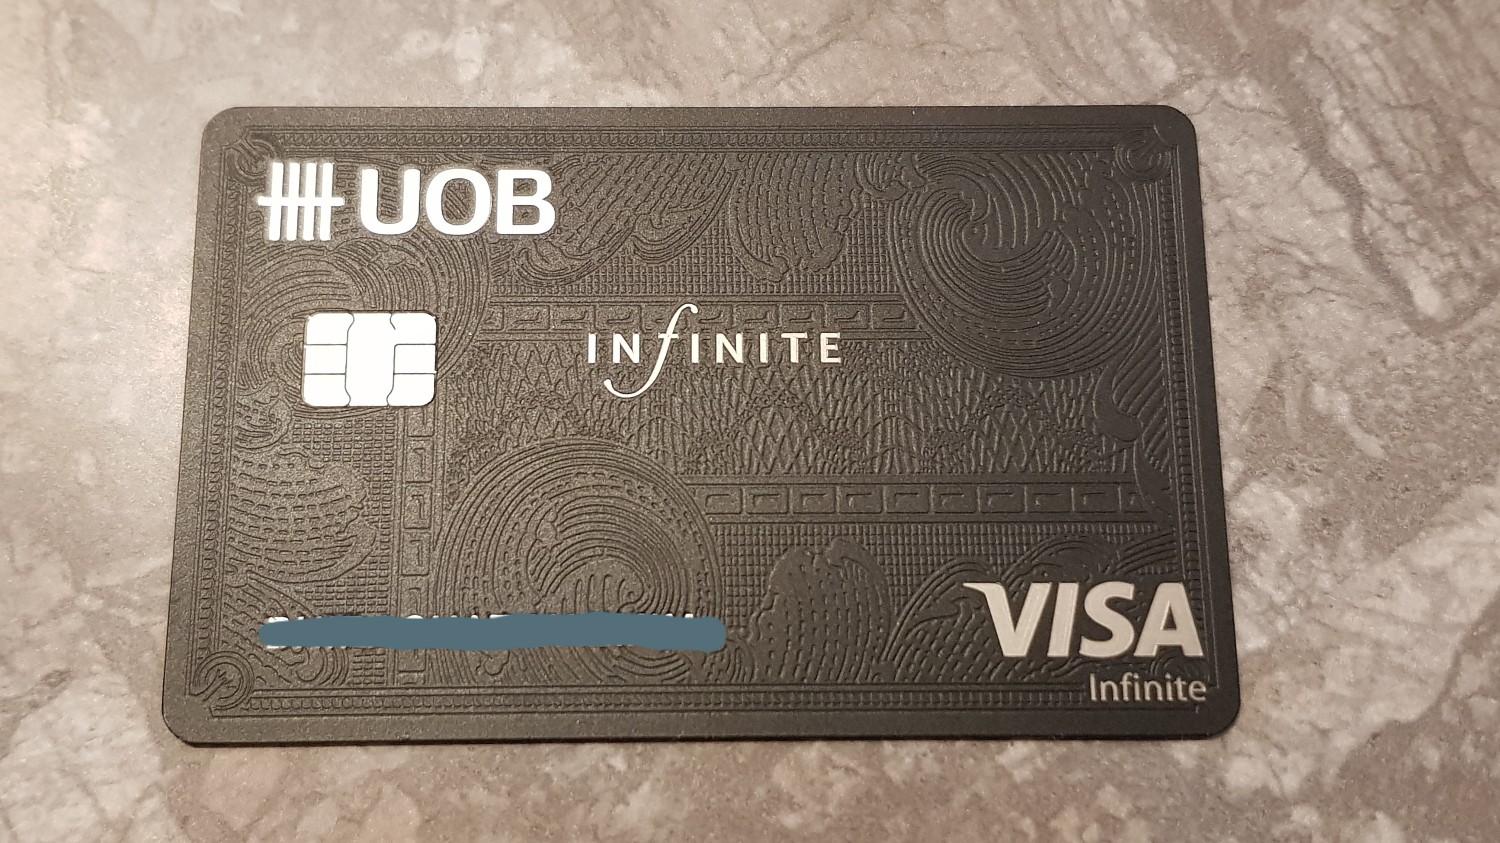 Uob visa infinite